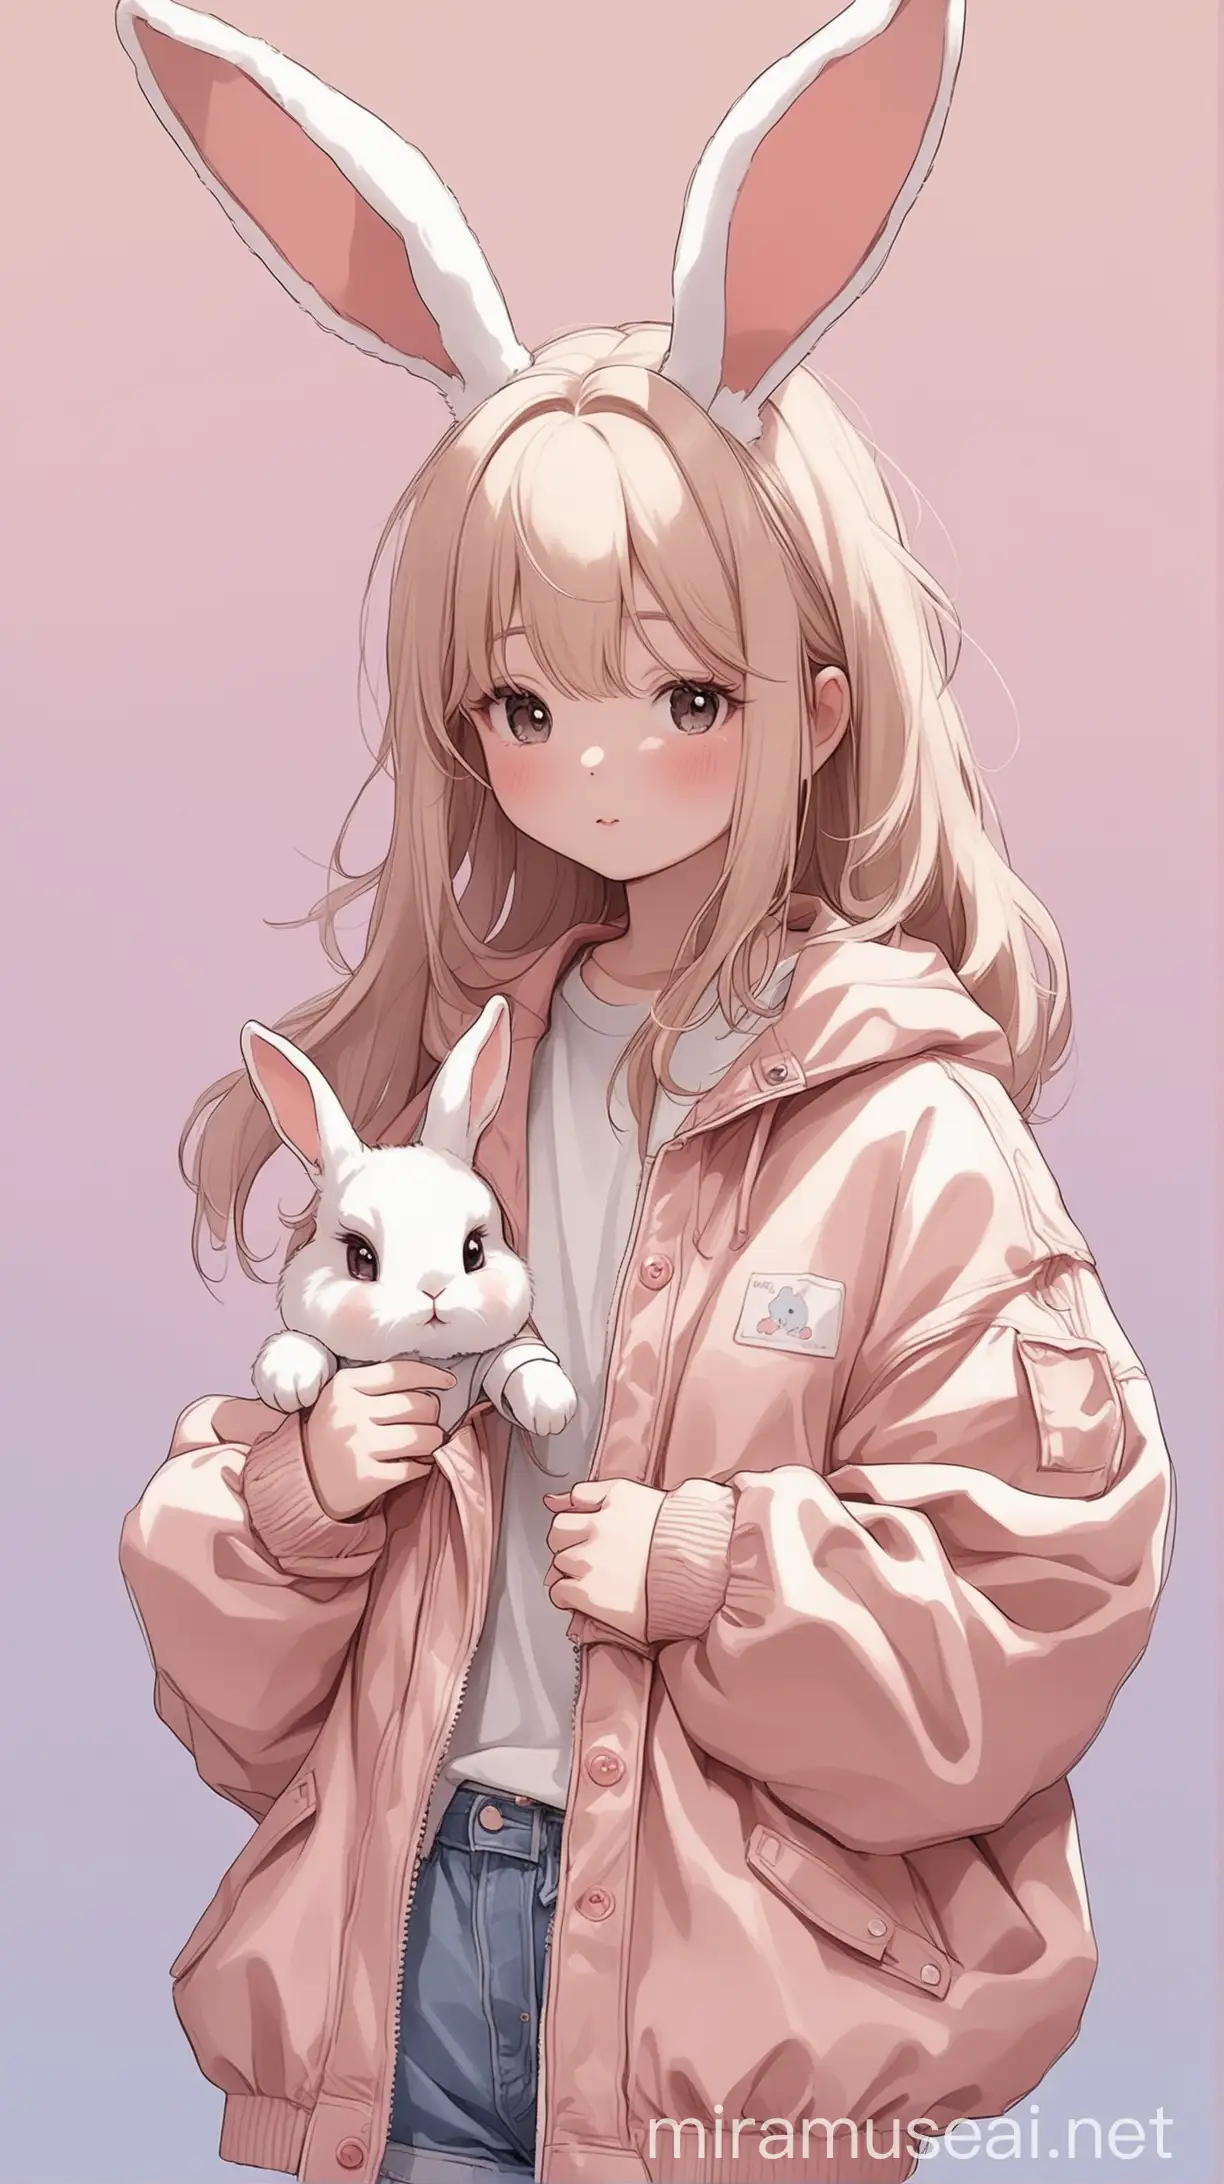 Adorable Rabbit in Stylish Jacket Fashionable Aesthetic Bunny Portrait